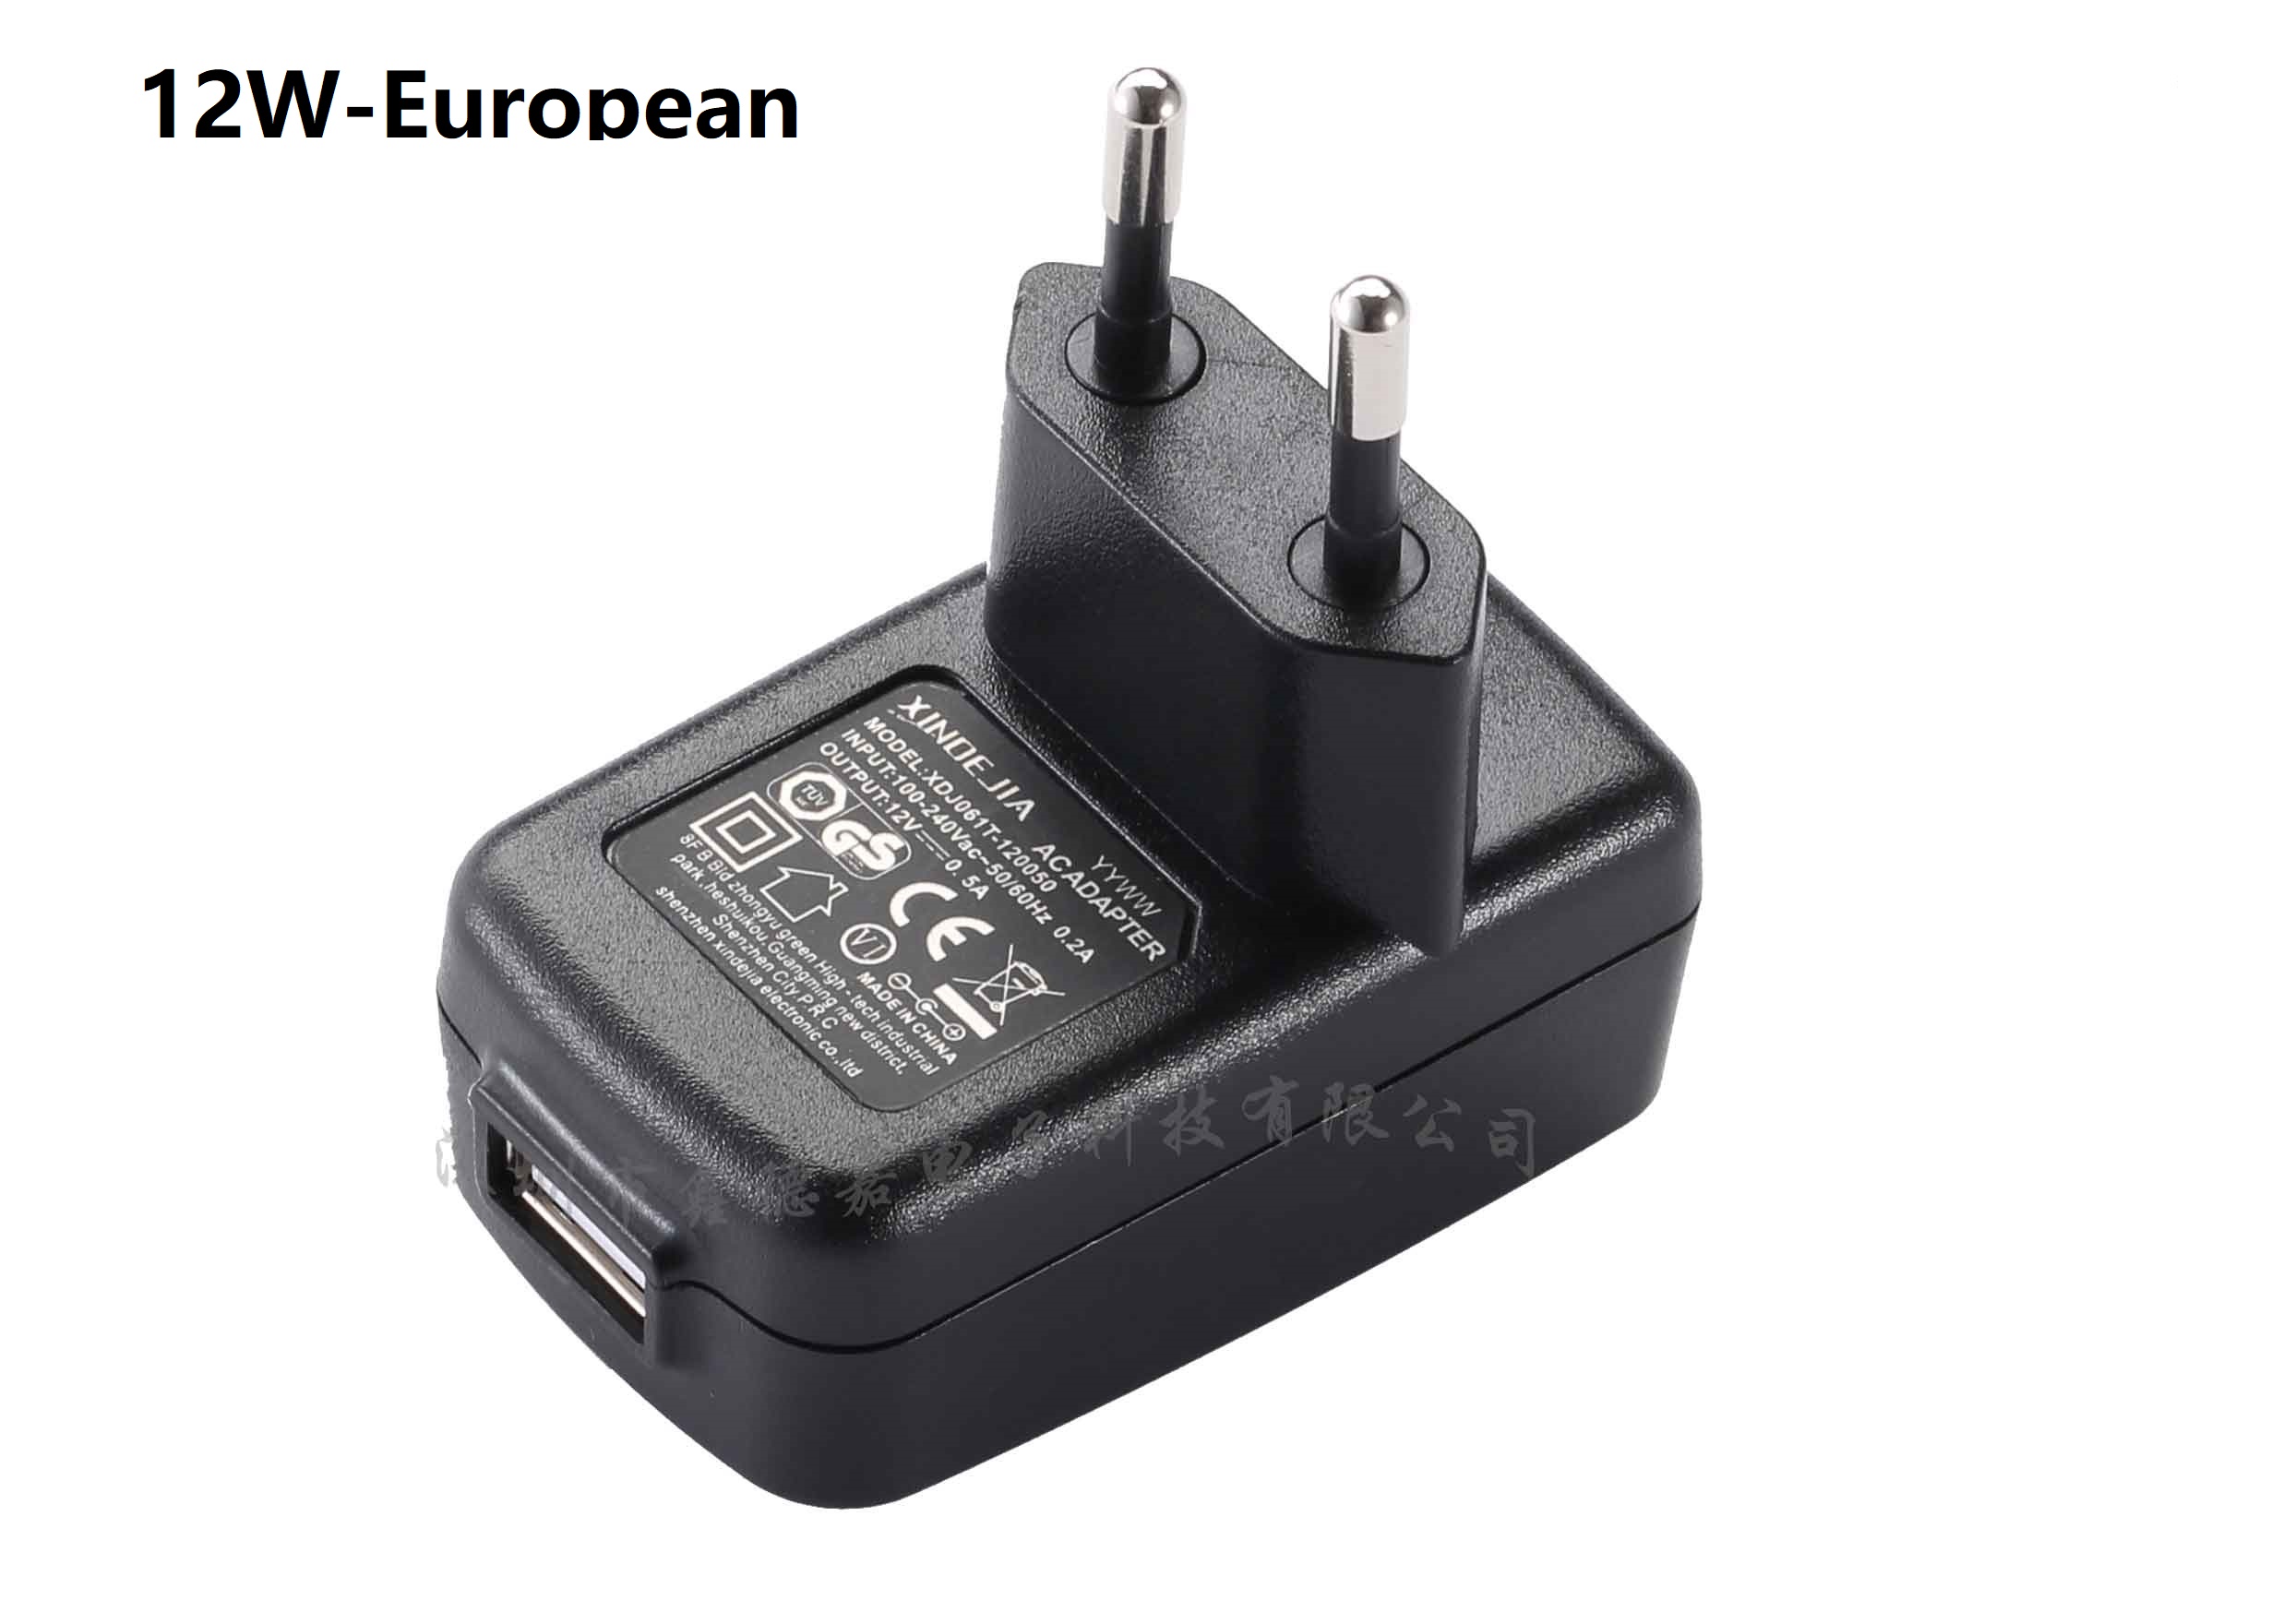 12W-European USB